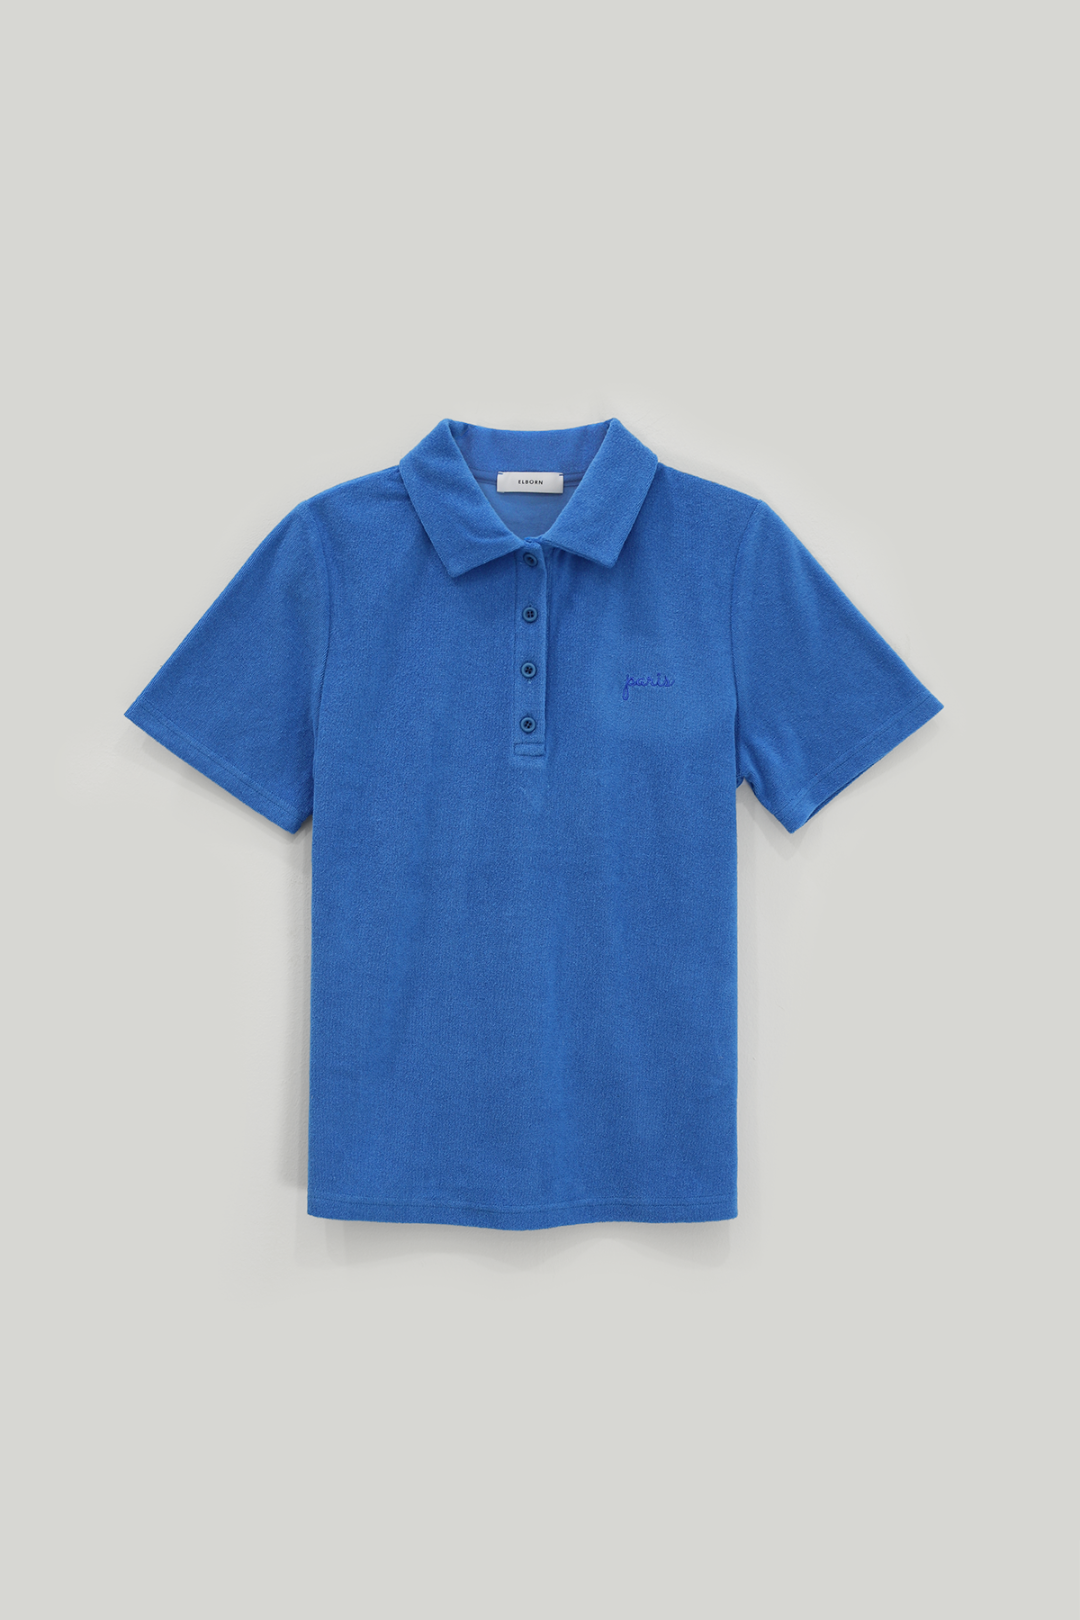 Paris Terry Polo Shirt (2 colors)